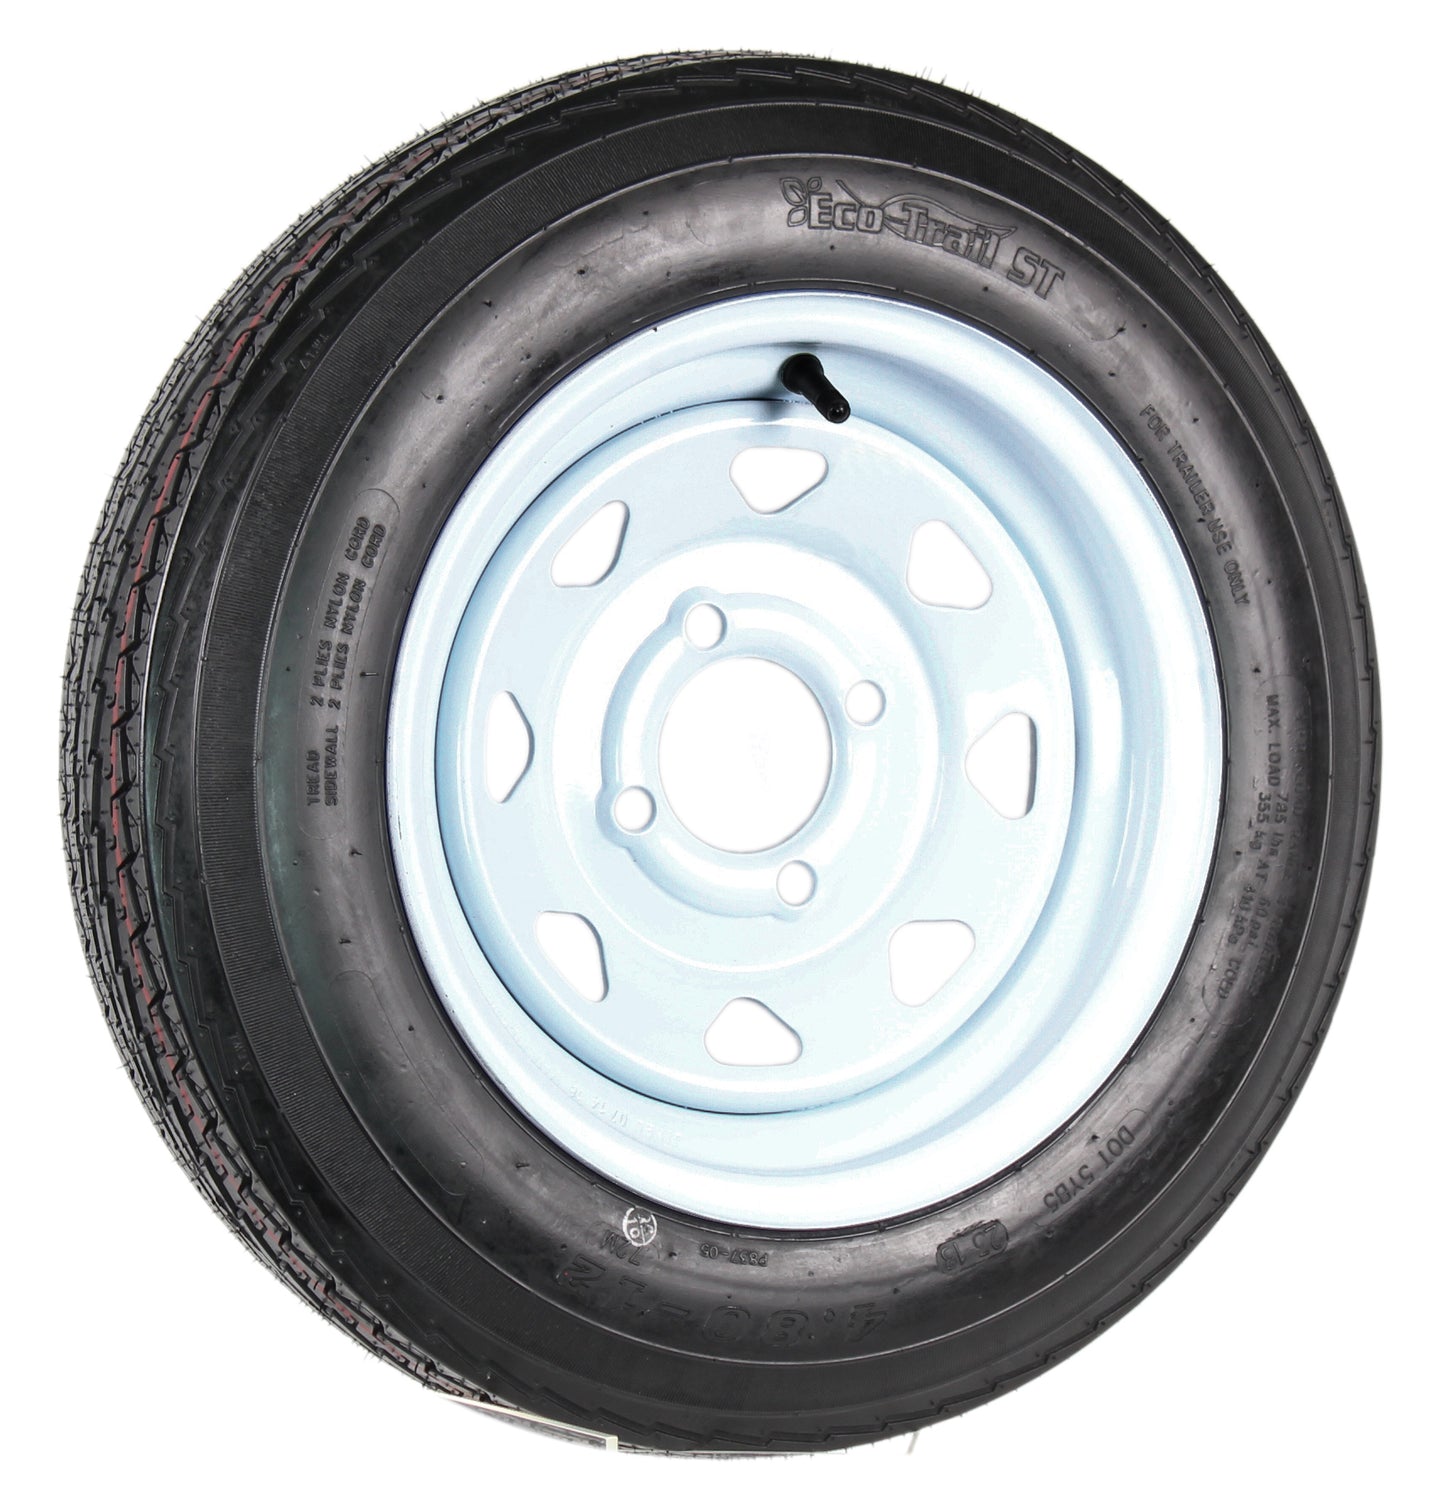 Trailer Tire On Rim 4.80-12 480-12 4.80 X 12 12 in. LRB 4 Lug Wheel White Spoke